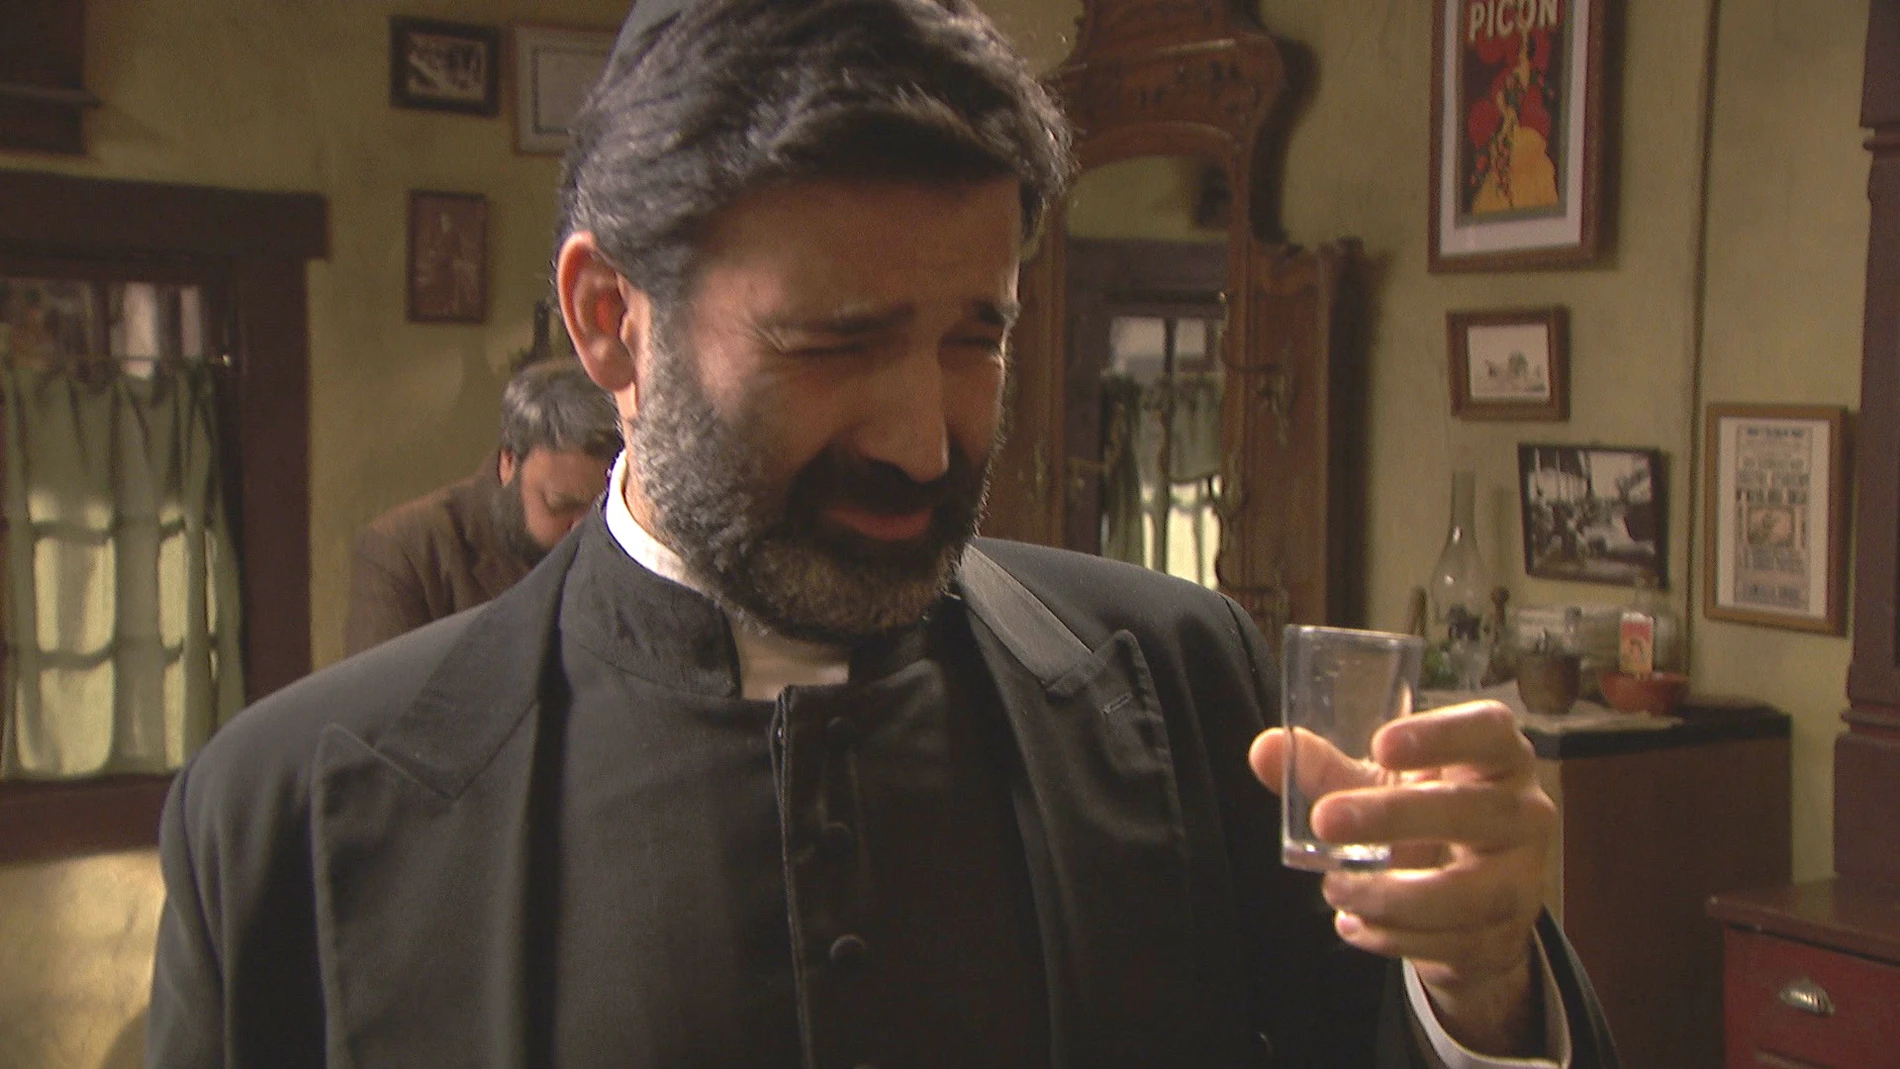  Don Berengario se da a la bebida al haber estropeado la Semana Santa